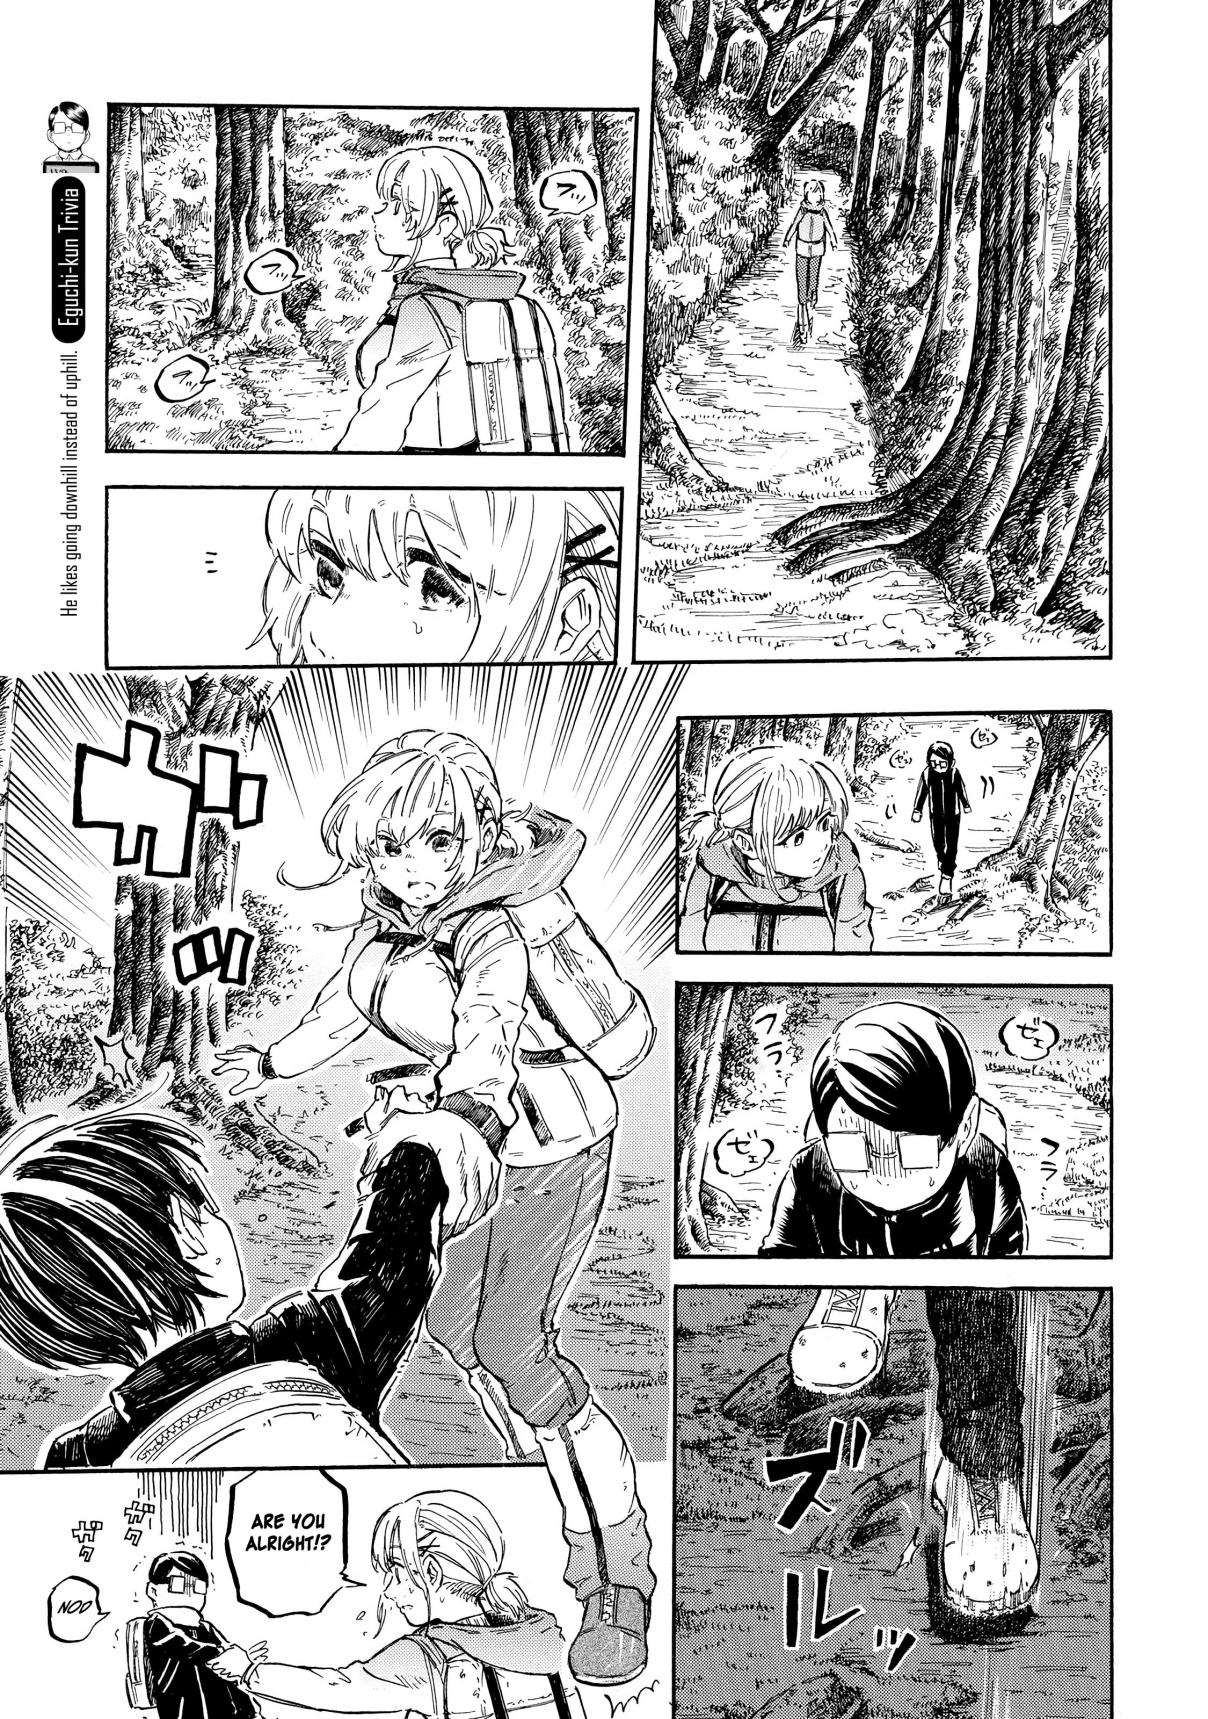 Eguchi kun Doesn't Miss a Thing Vol. 1 Ch. 6 Eguchi kun And Nature